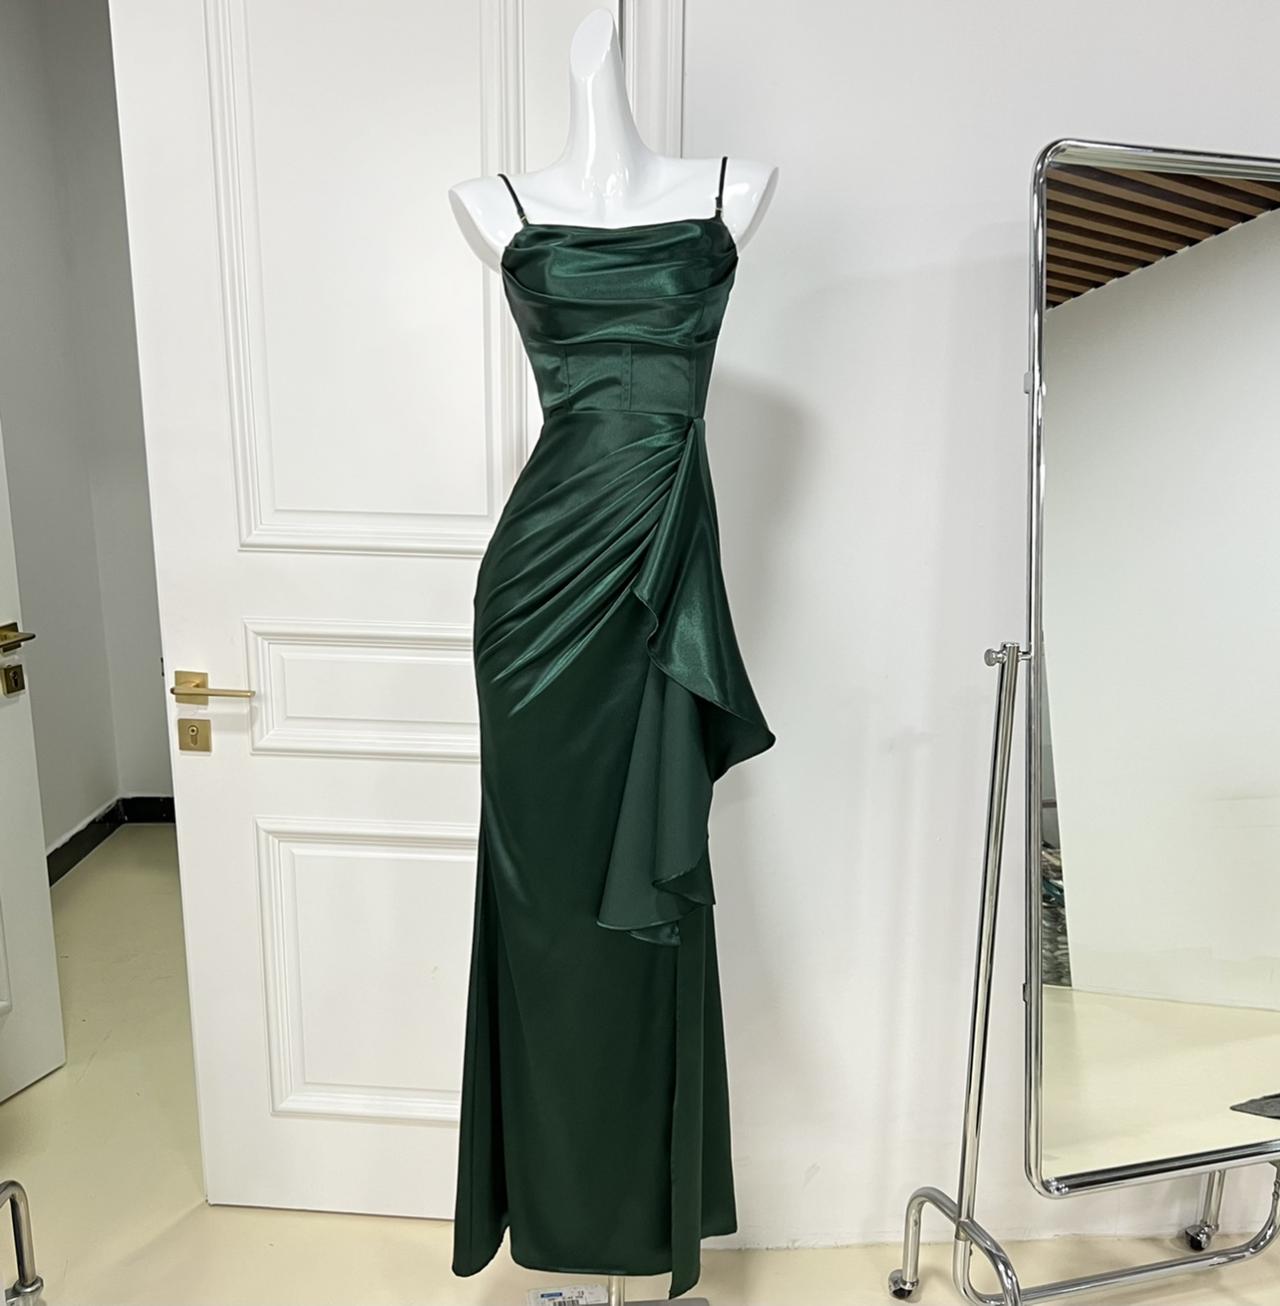 Elegant Satin Dress Dress Drag Floor Open Ruffle Long Dress Annual Meeting Dress